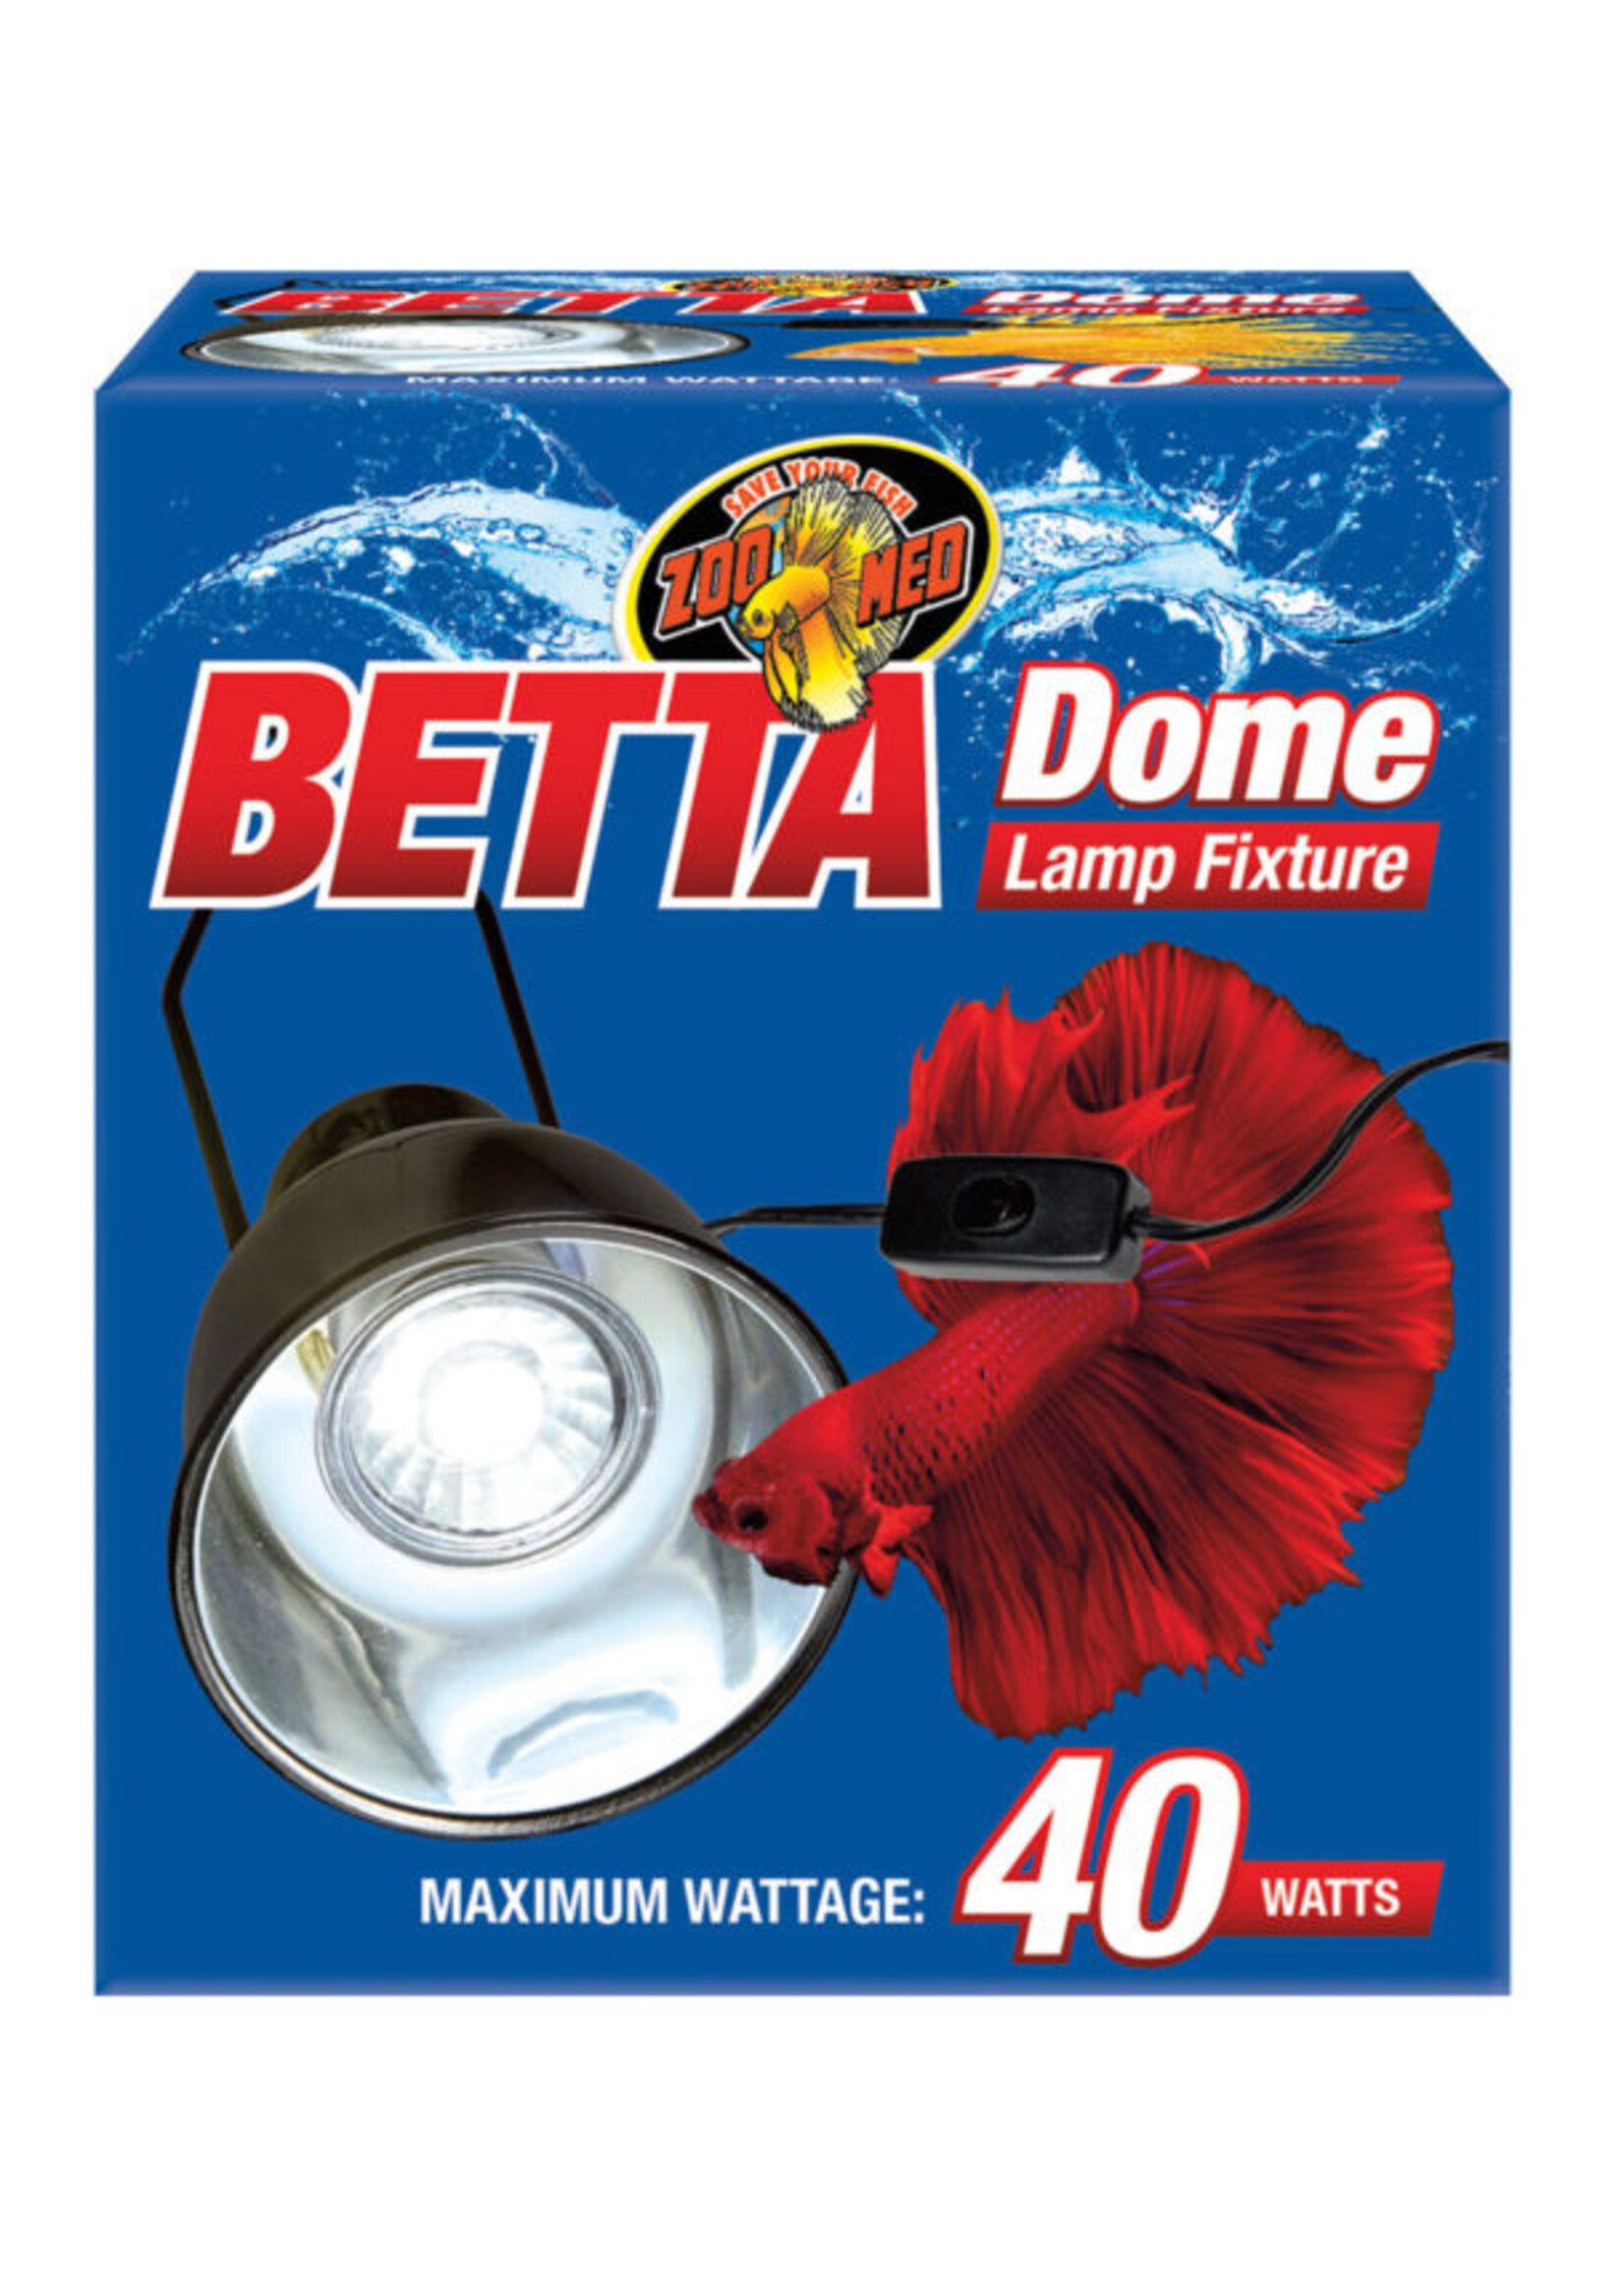 Zoo Med Zoo Med Betta Dome Lamp Fixture 40watts Max